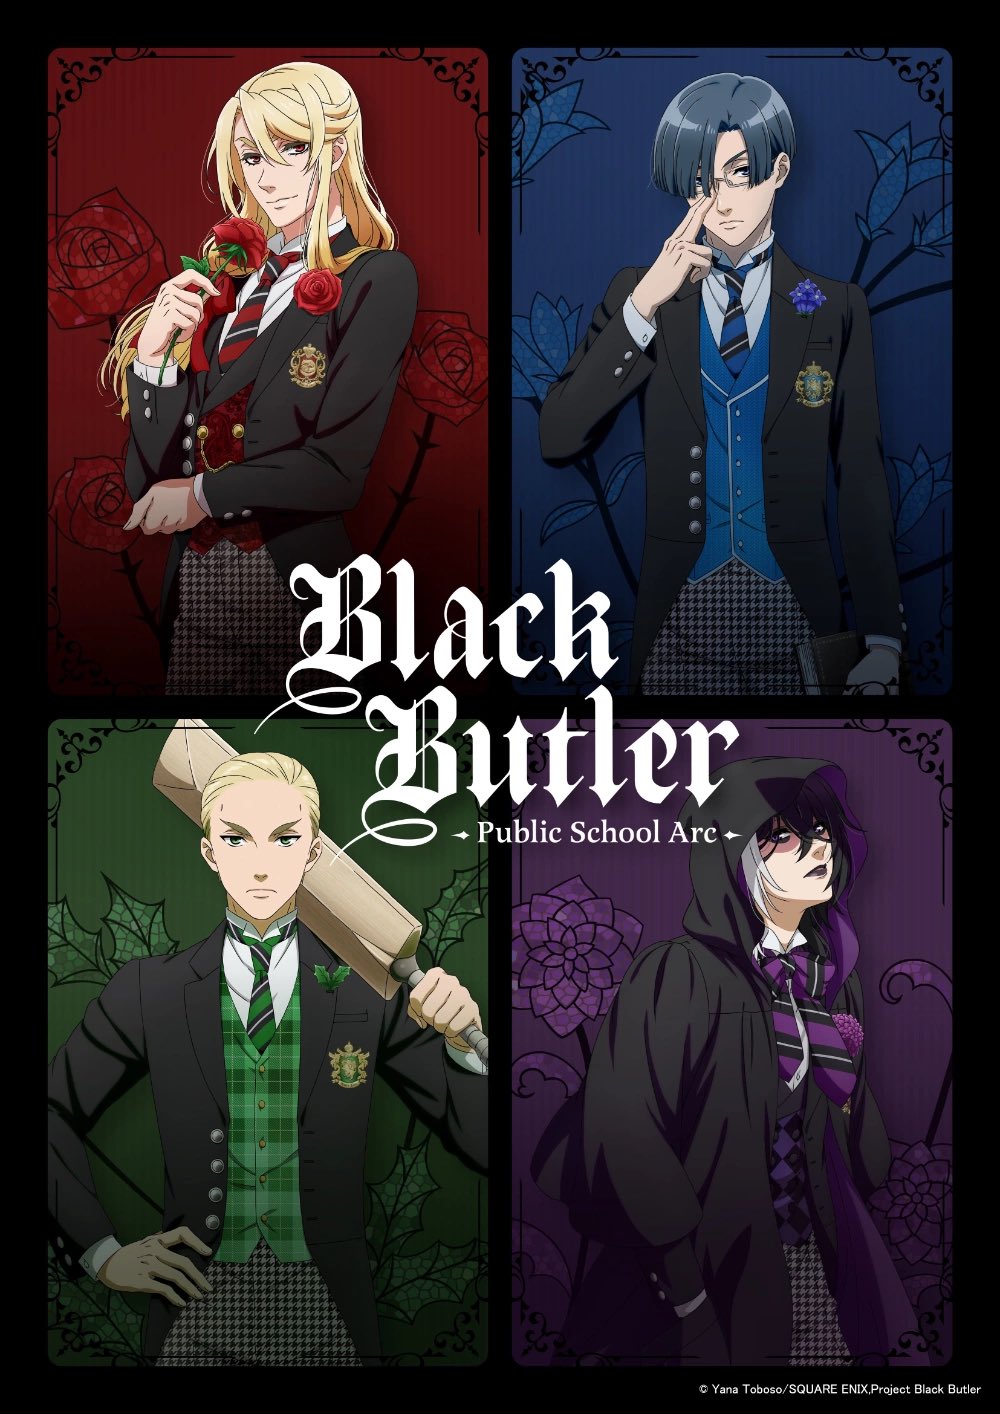 Black Butler - Wikipedia